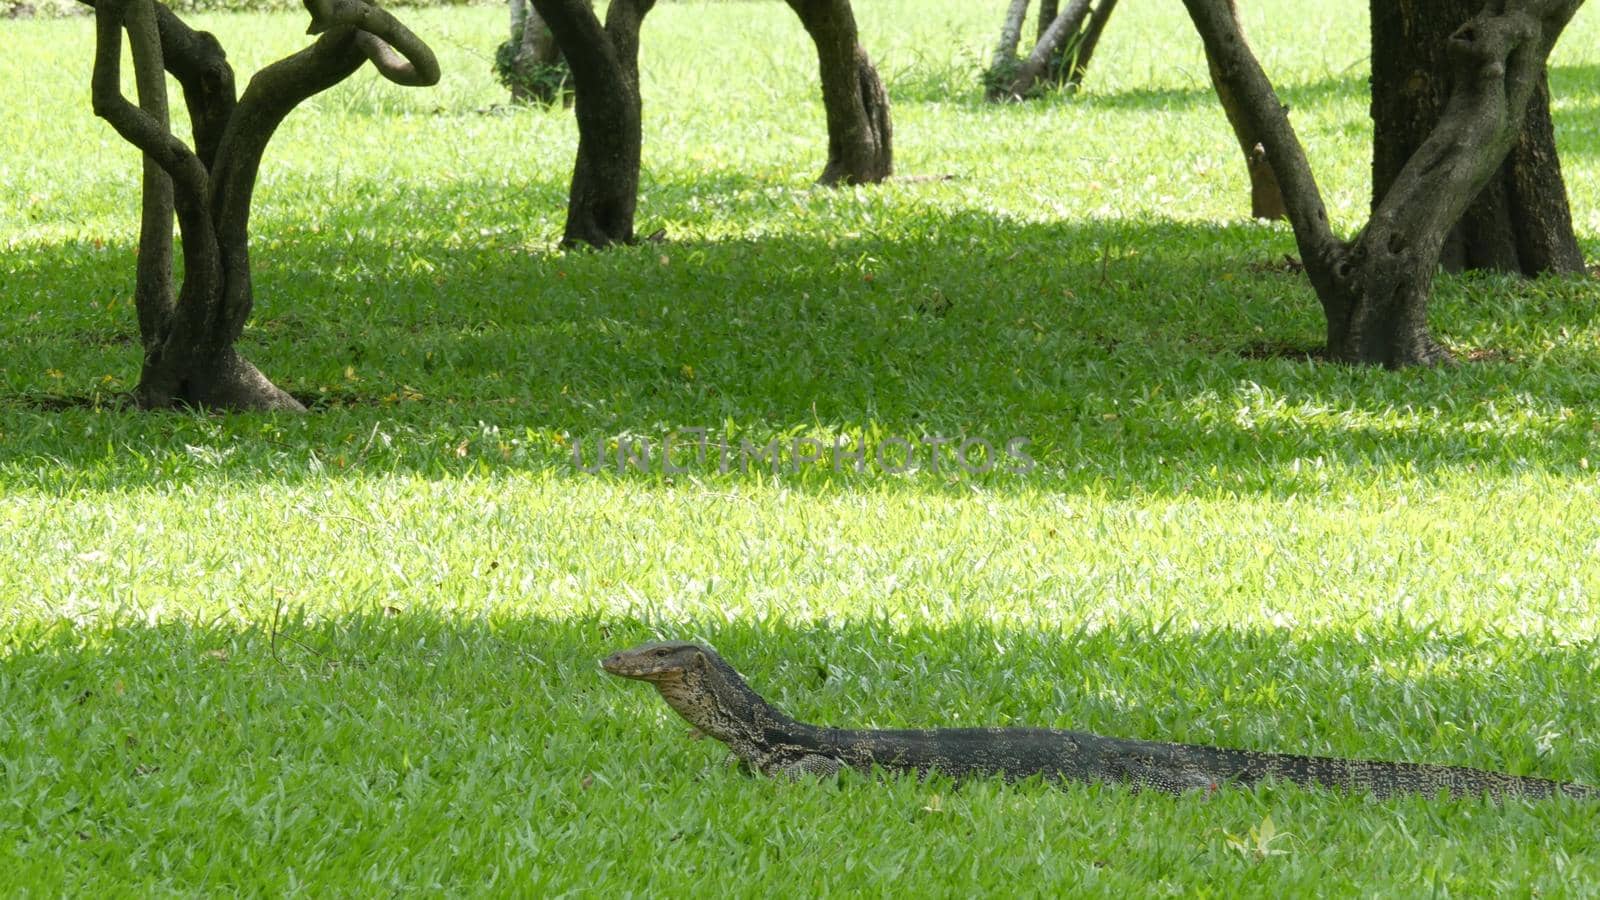 Asian common water monitor large varanid lizard native to Asia. Varanus salvator on the green grass near riverbank, lake or pond. Carnivore Reptile hunting. Wild dragon predator on Bangkok street.